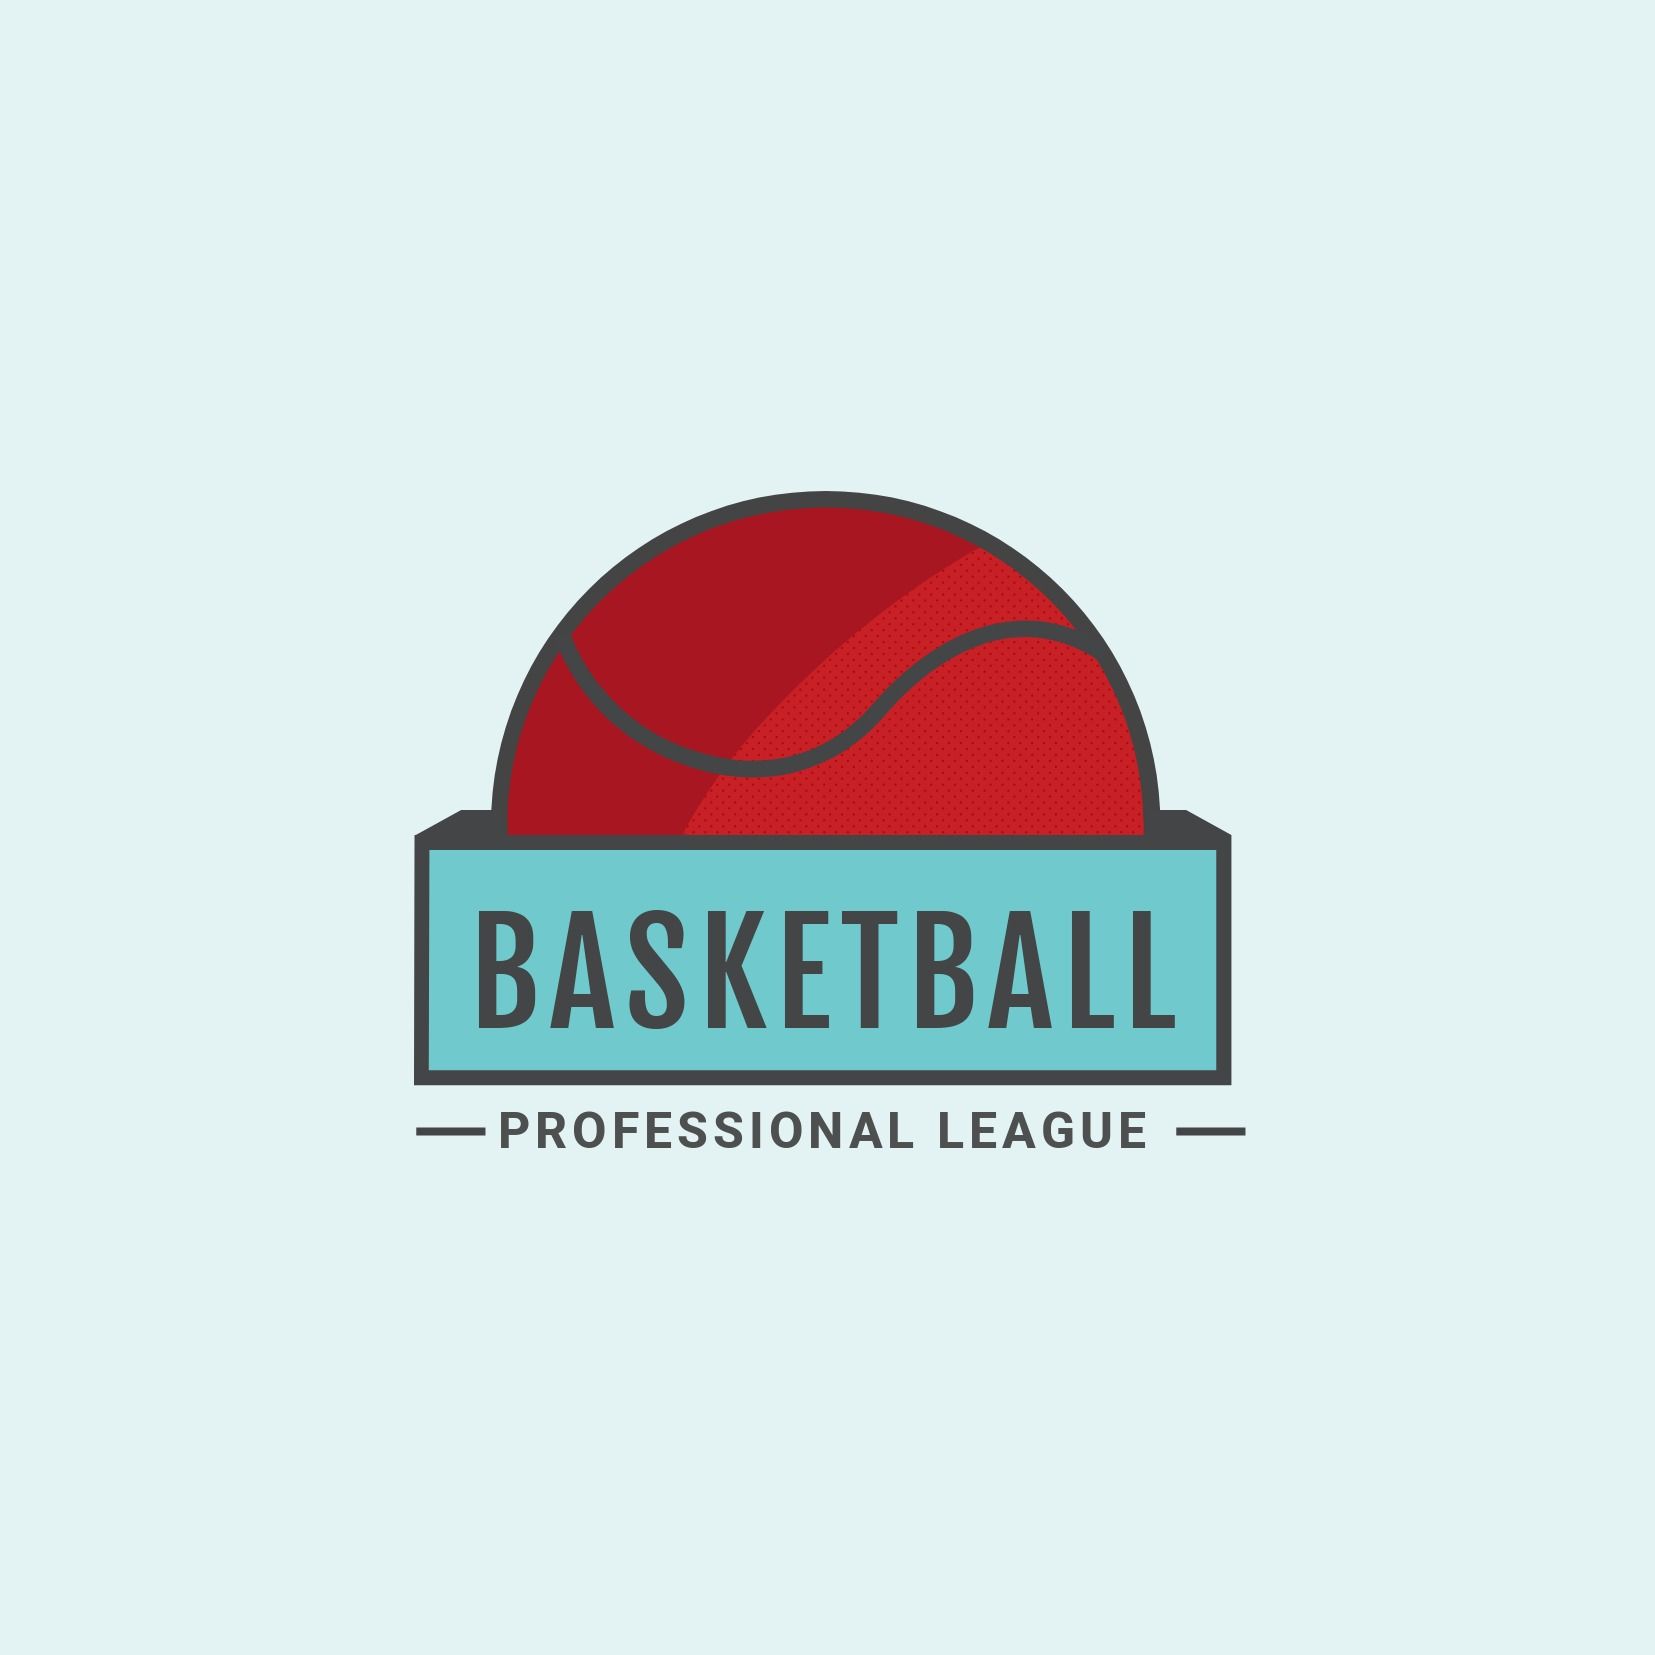 Basketball Logo Creative Designs - A step-by-step guide to creative logo design - Image